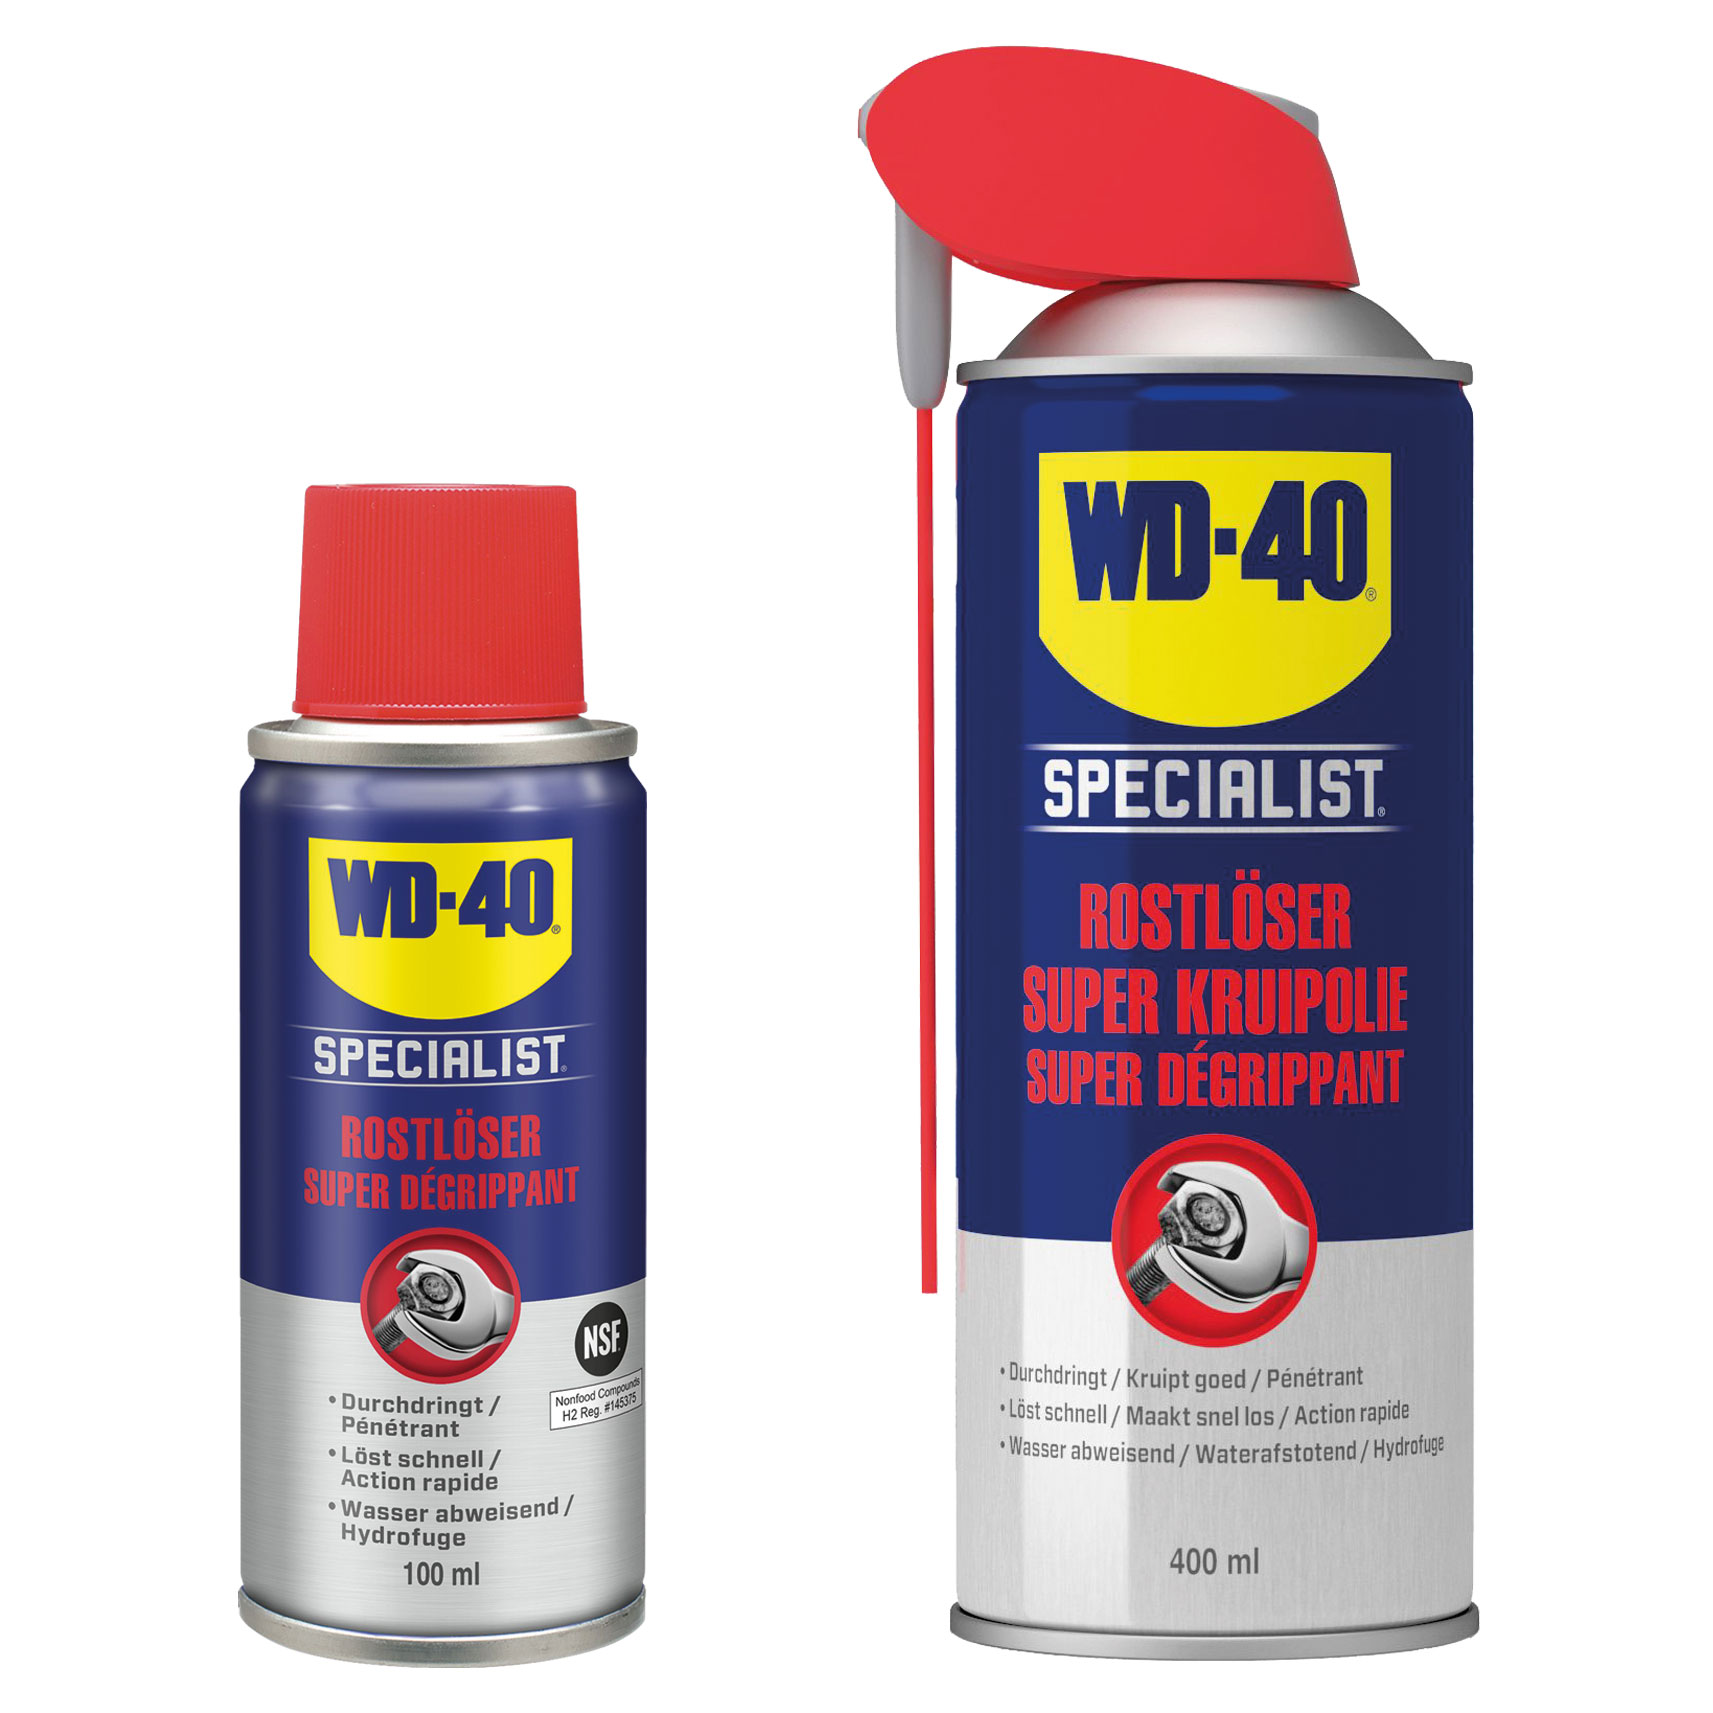 Spray super dégrippant WD-40